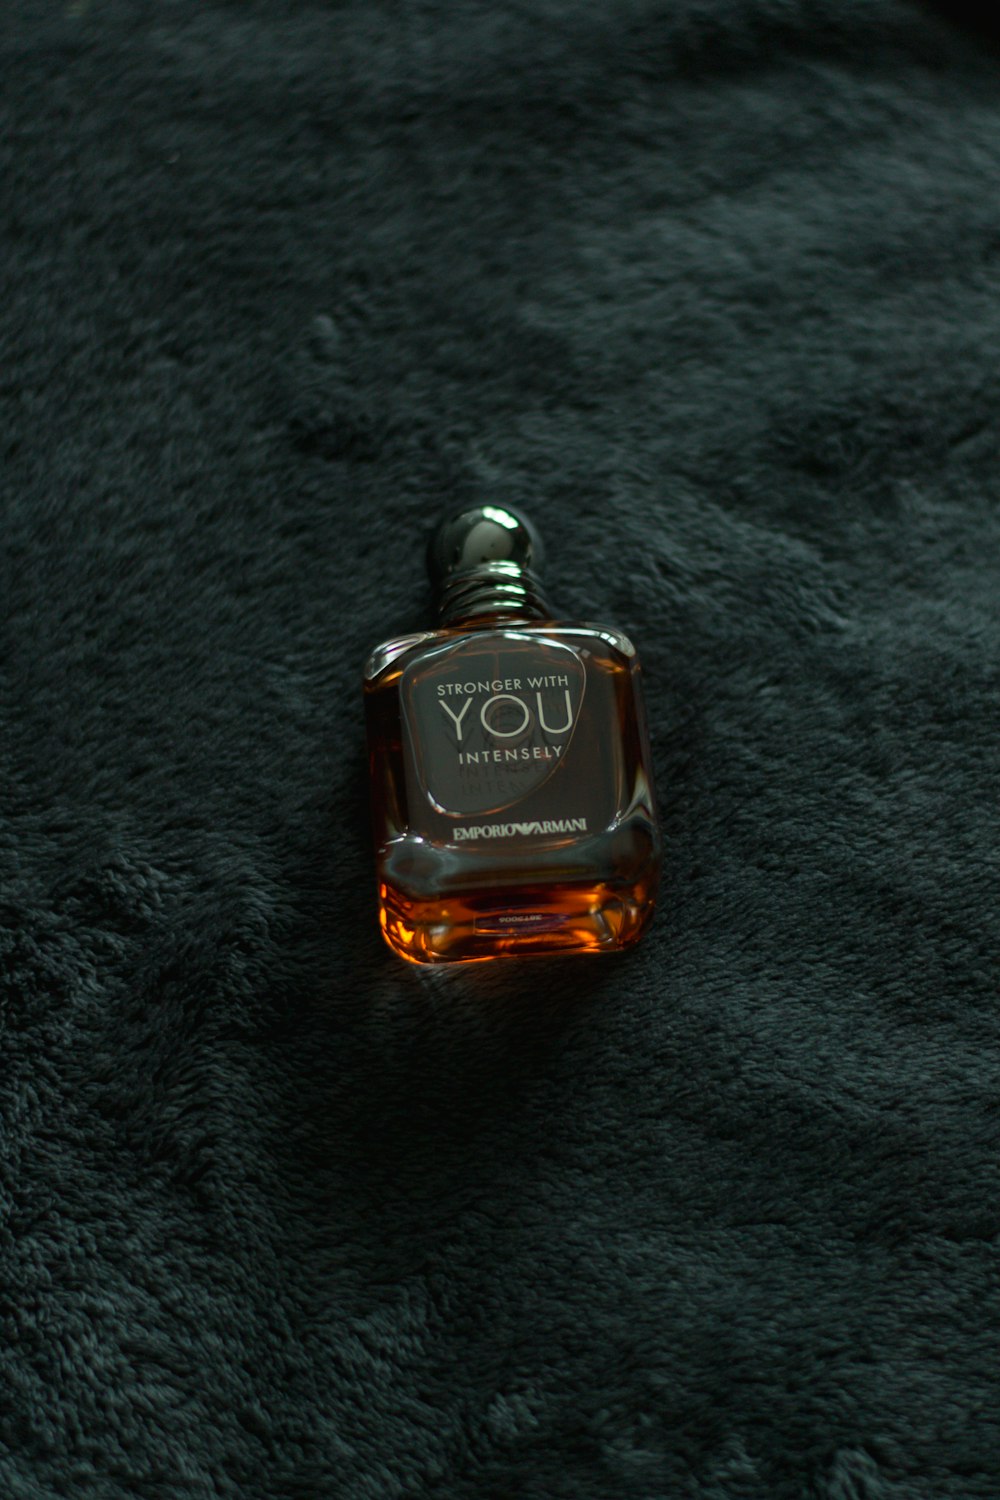 black and gold perfume bottle on black textile